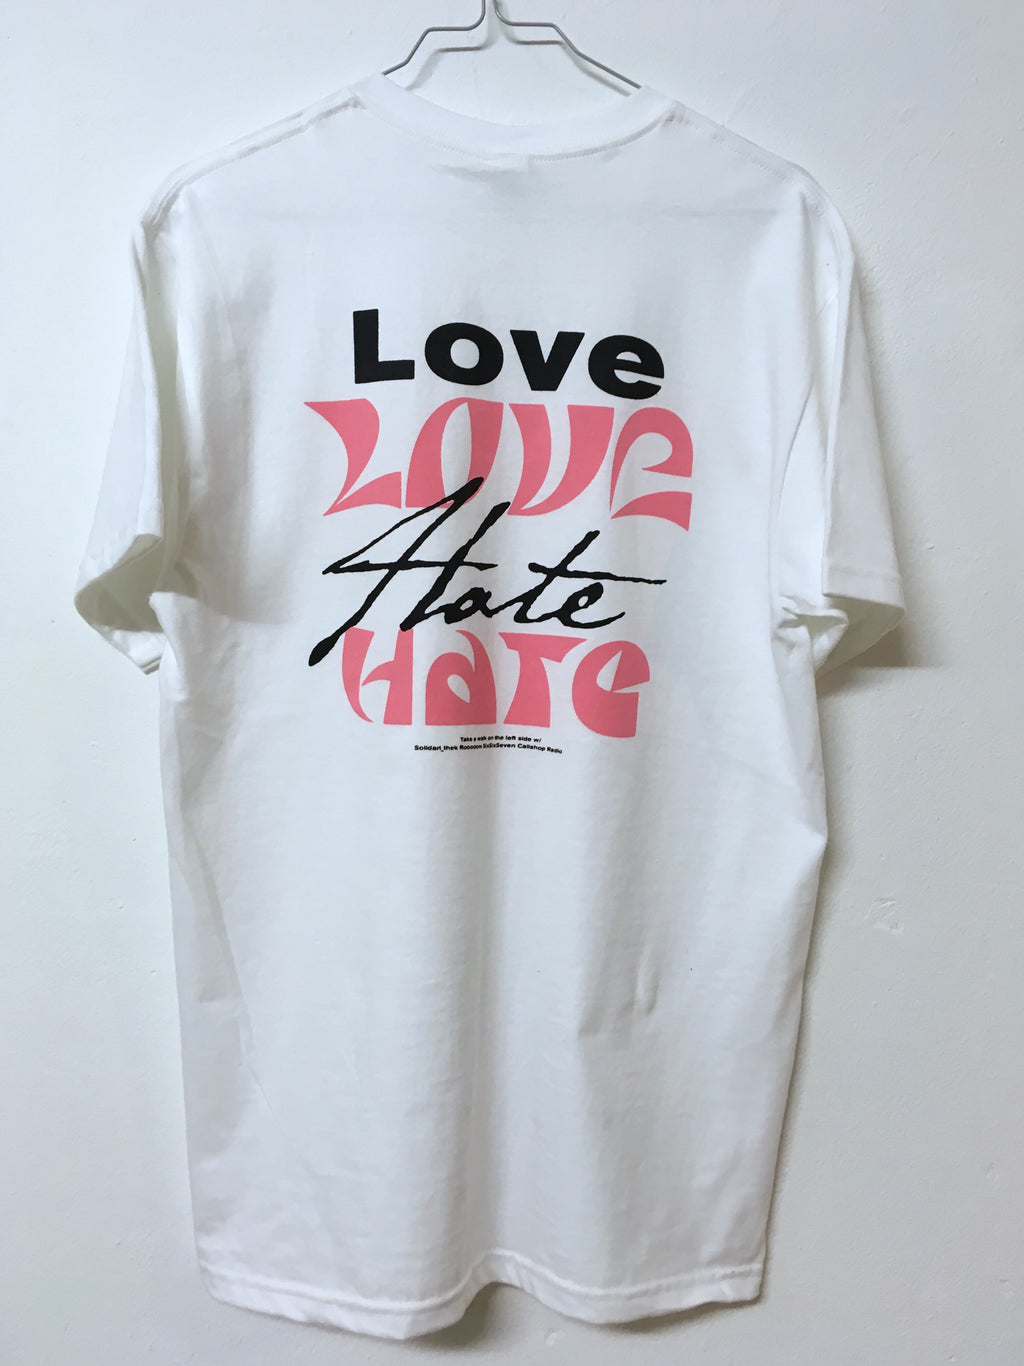 Silence Kills - "Love Love Hate Hate" T-Shirt kurzärmlig